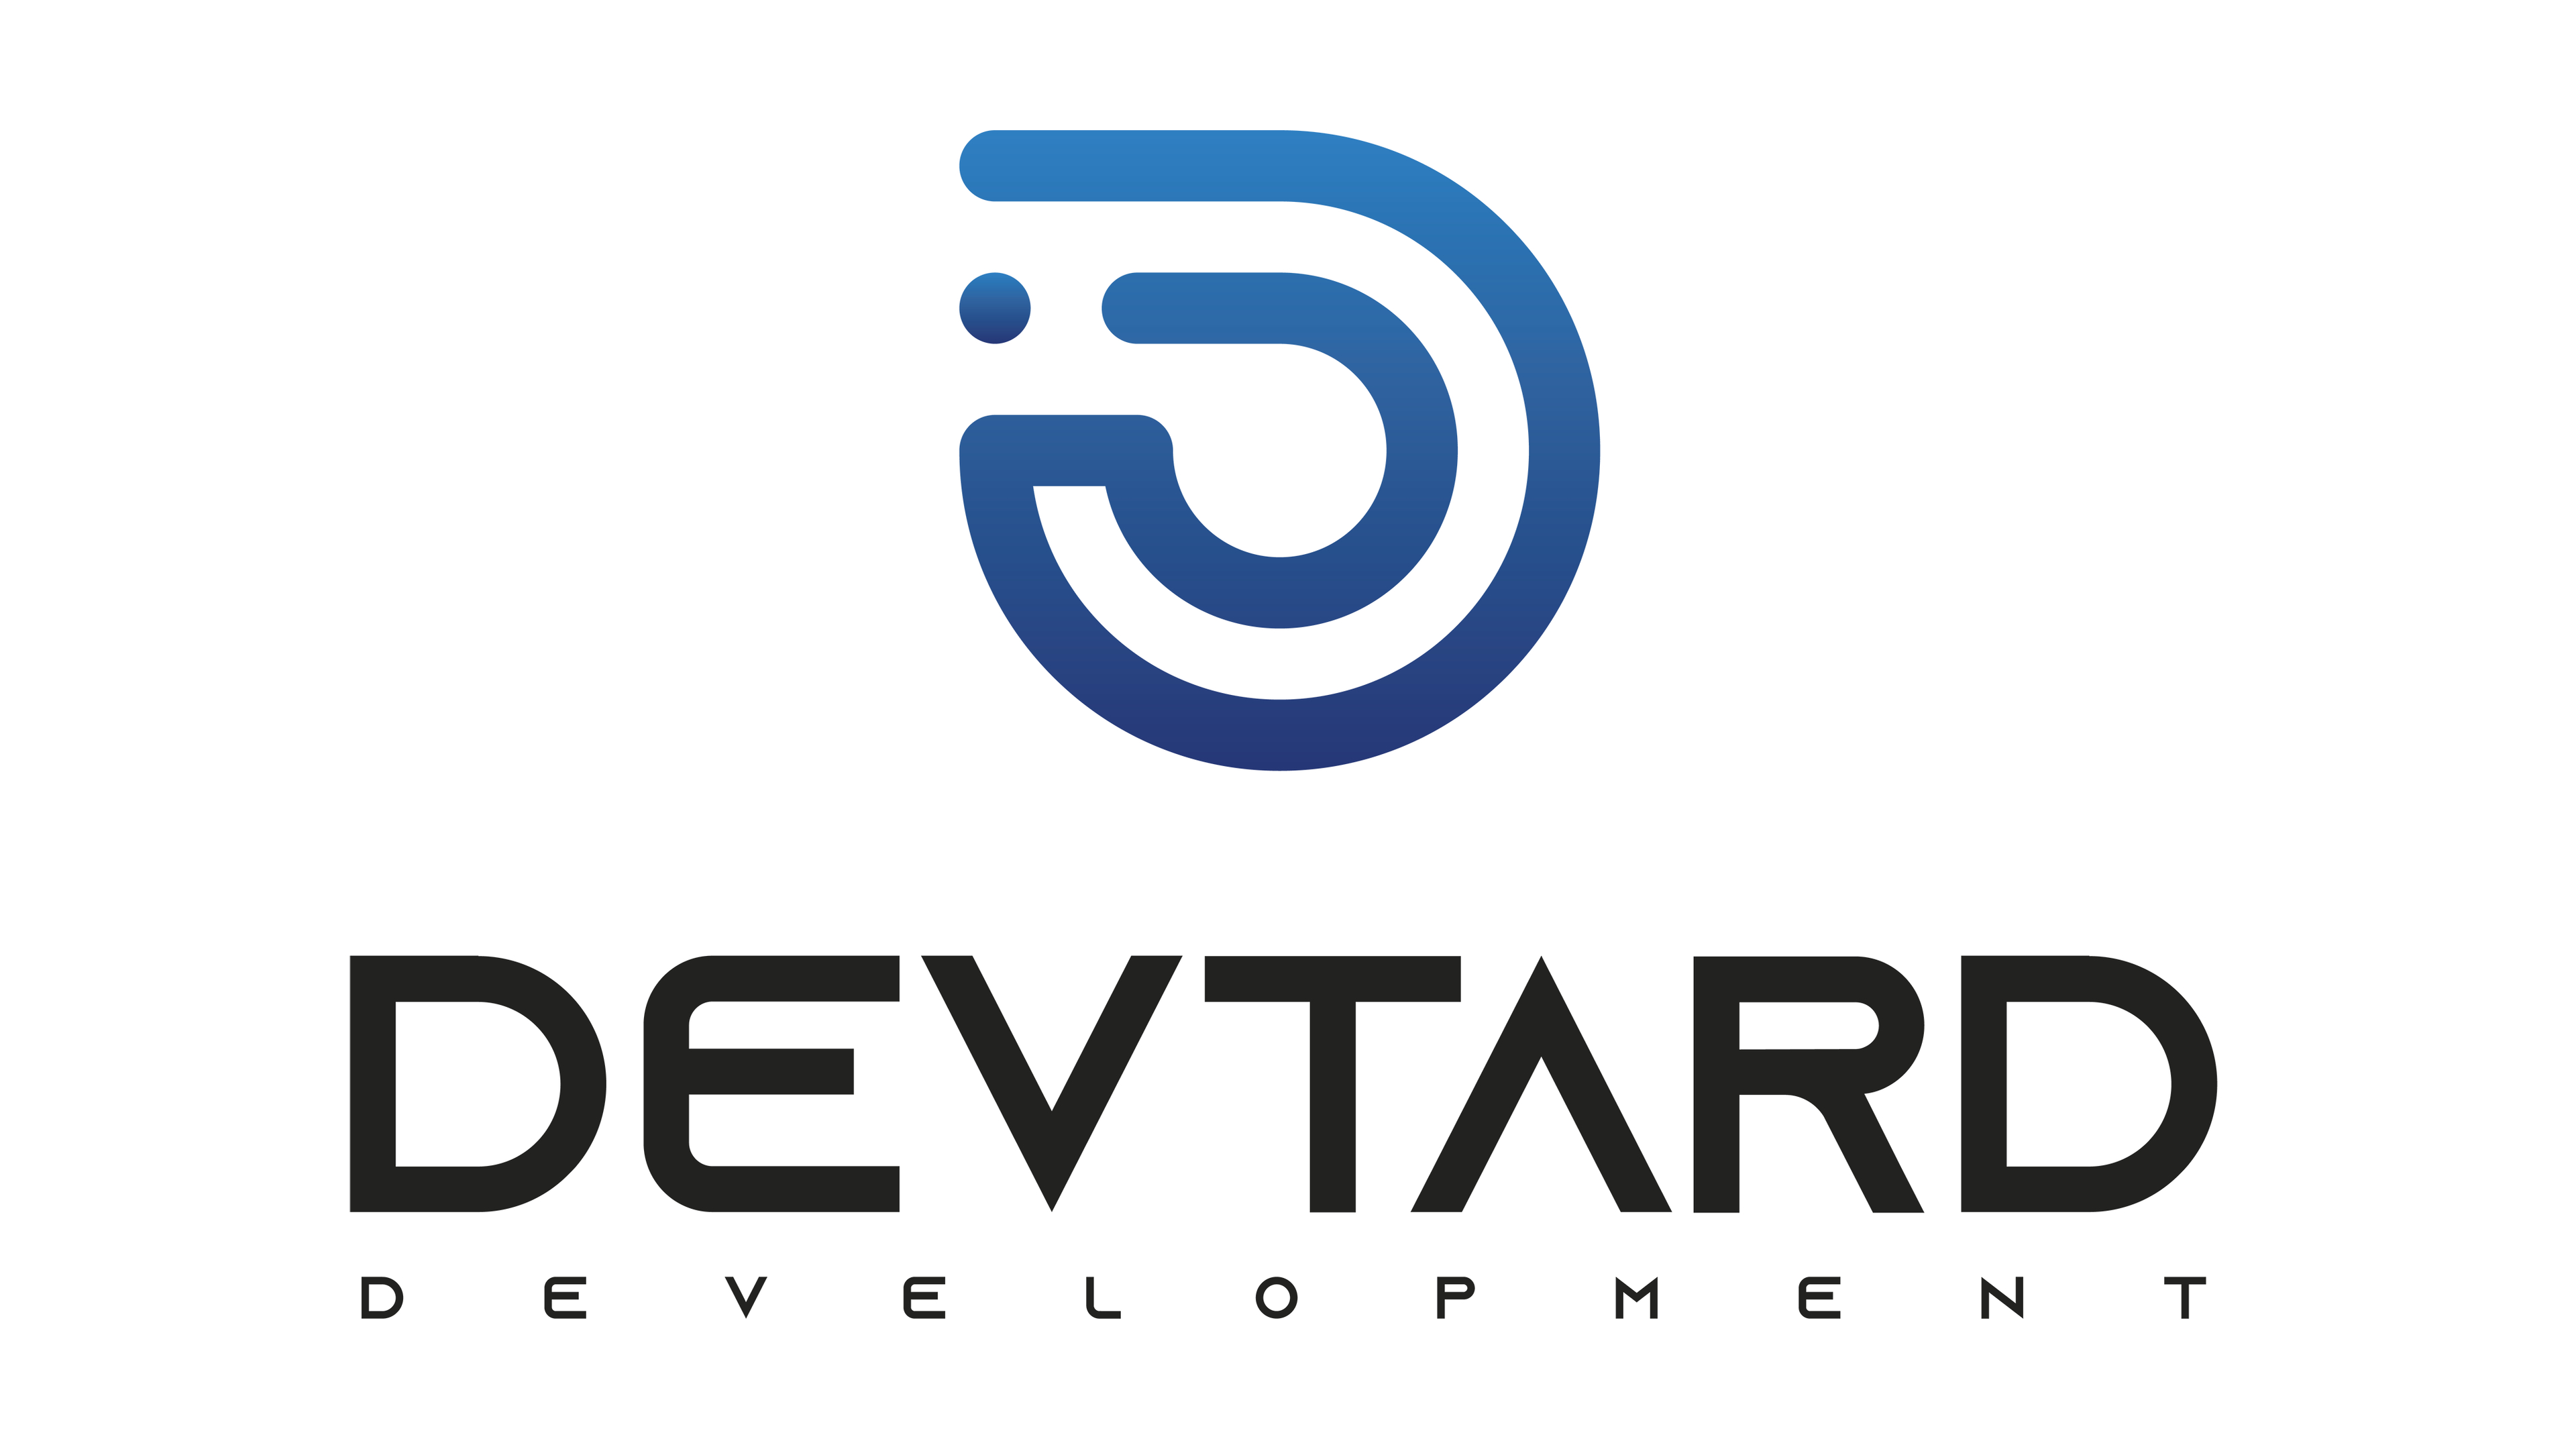 DevTard Development